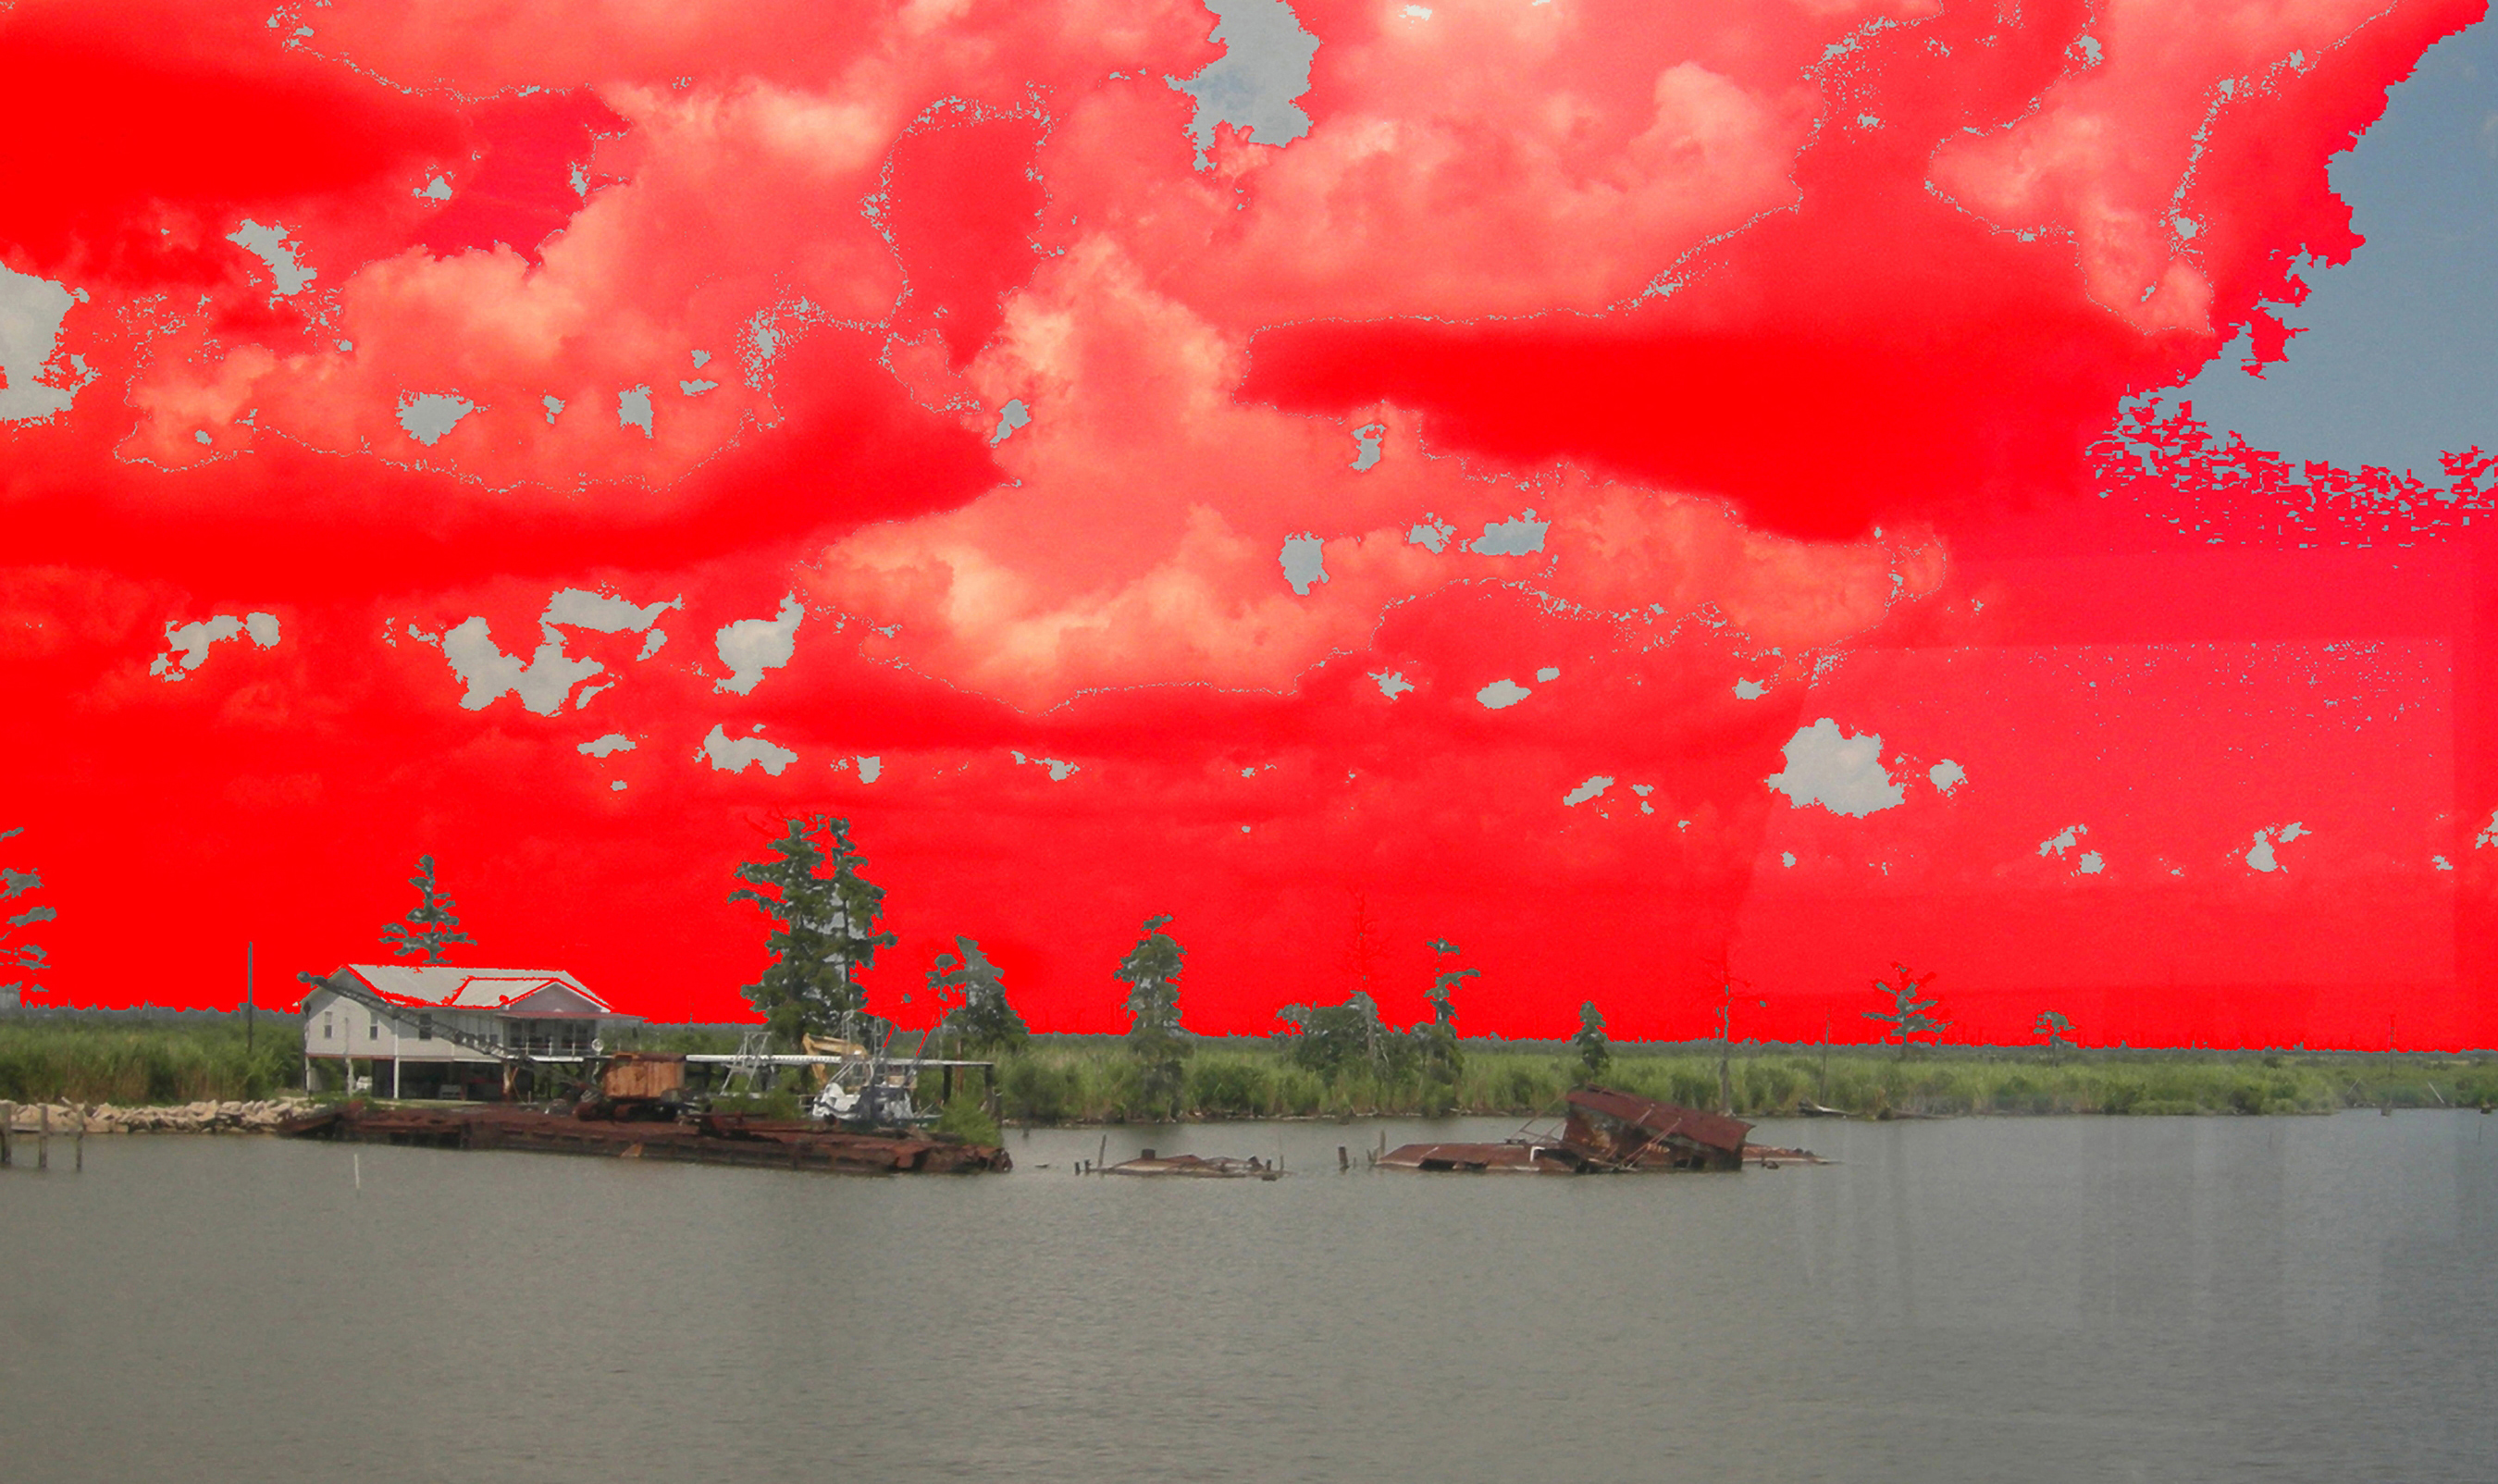 Aviva Rahmani, Warming Skies Over the Louisiana Bayous Seen From a Train Window (c. 2009)